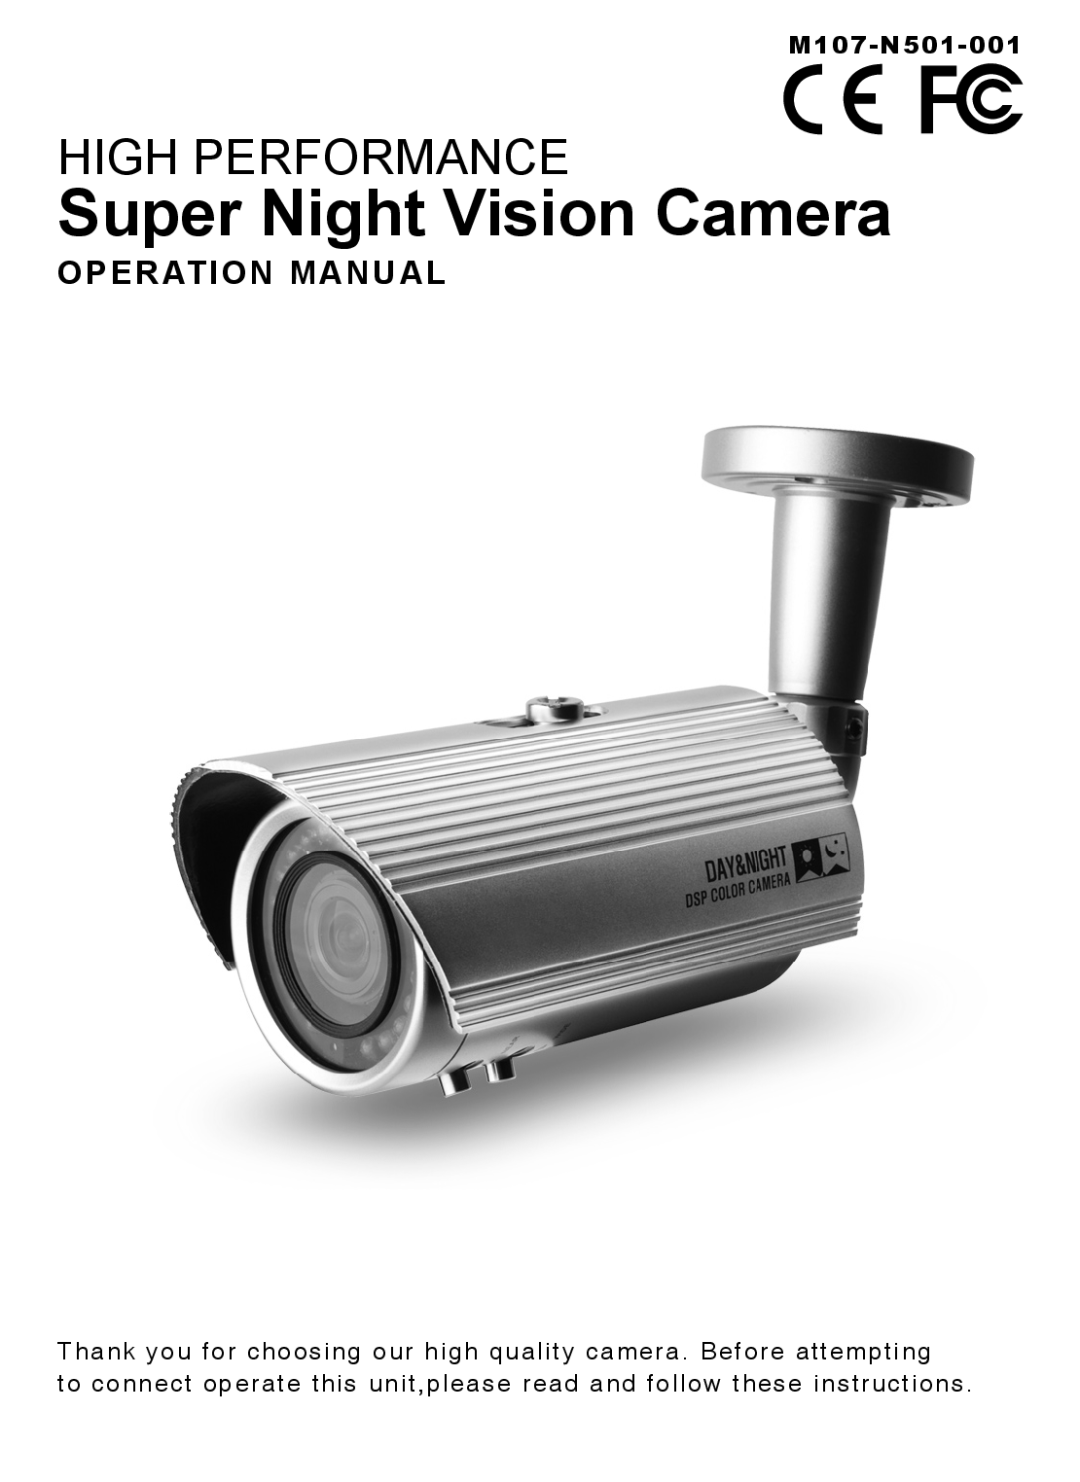 EverFocus M107-N501-001 operation manual Super Night Vision Camera, High Performance 